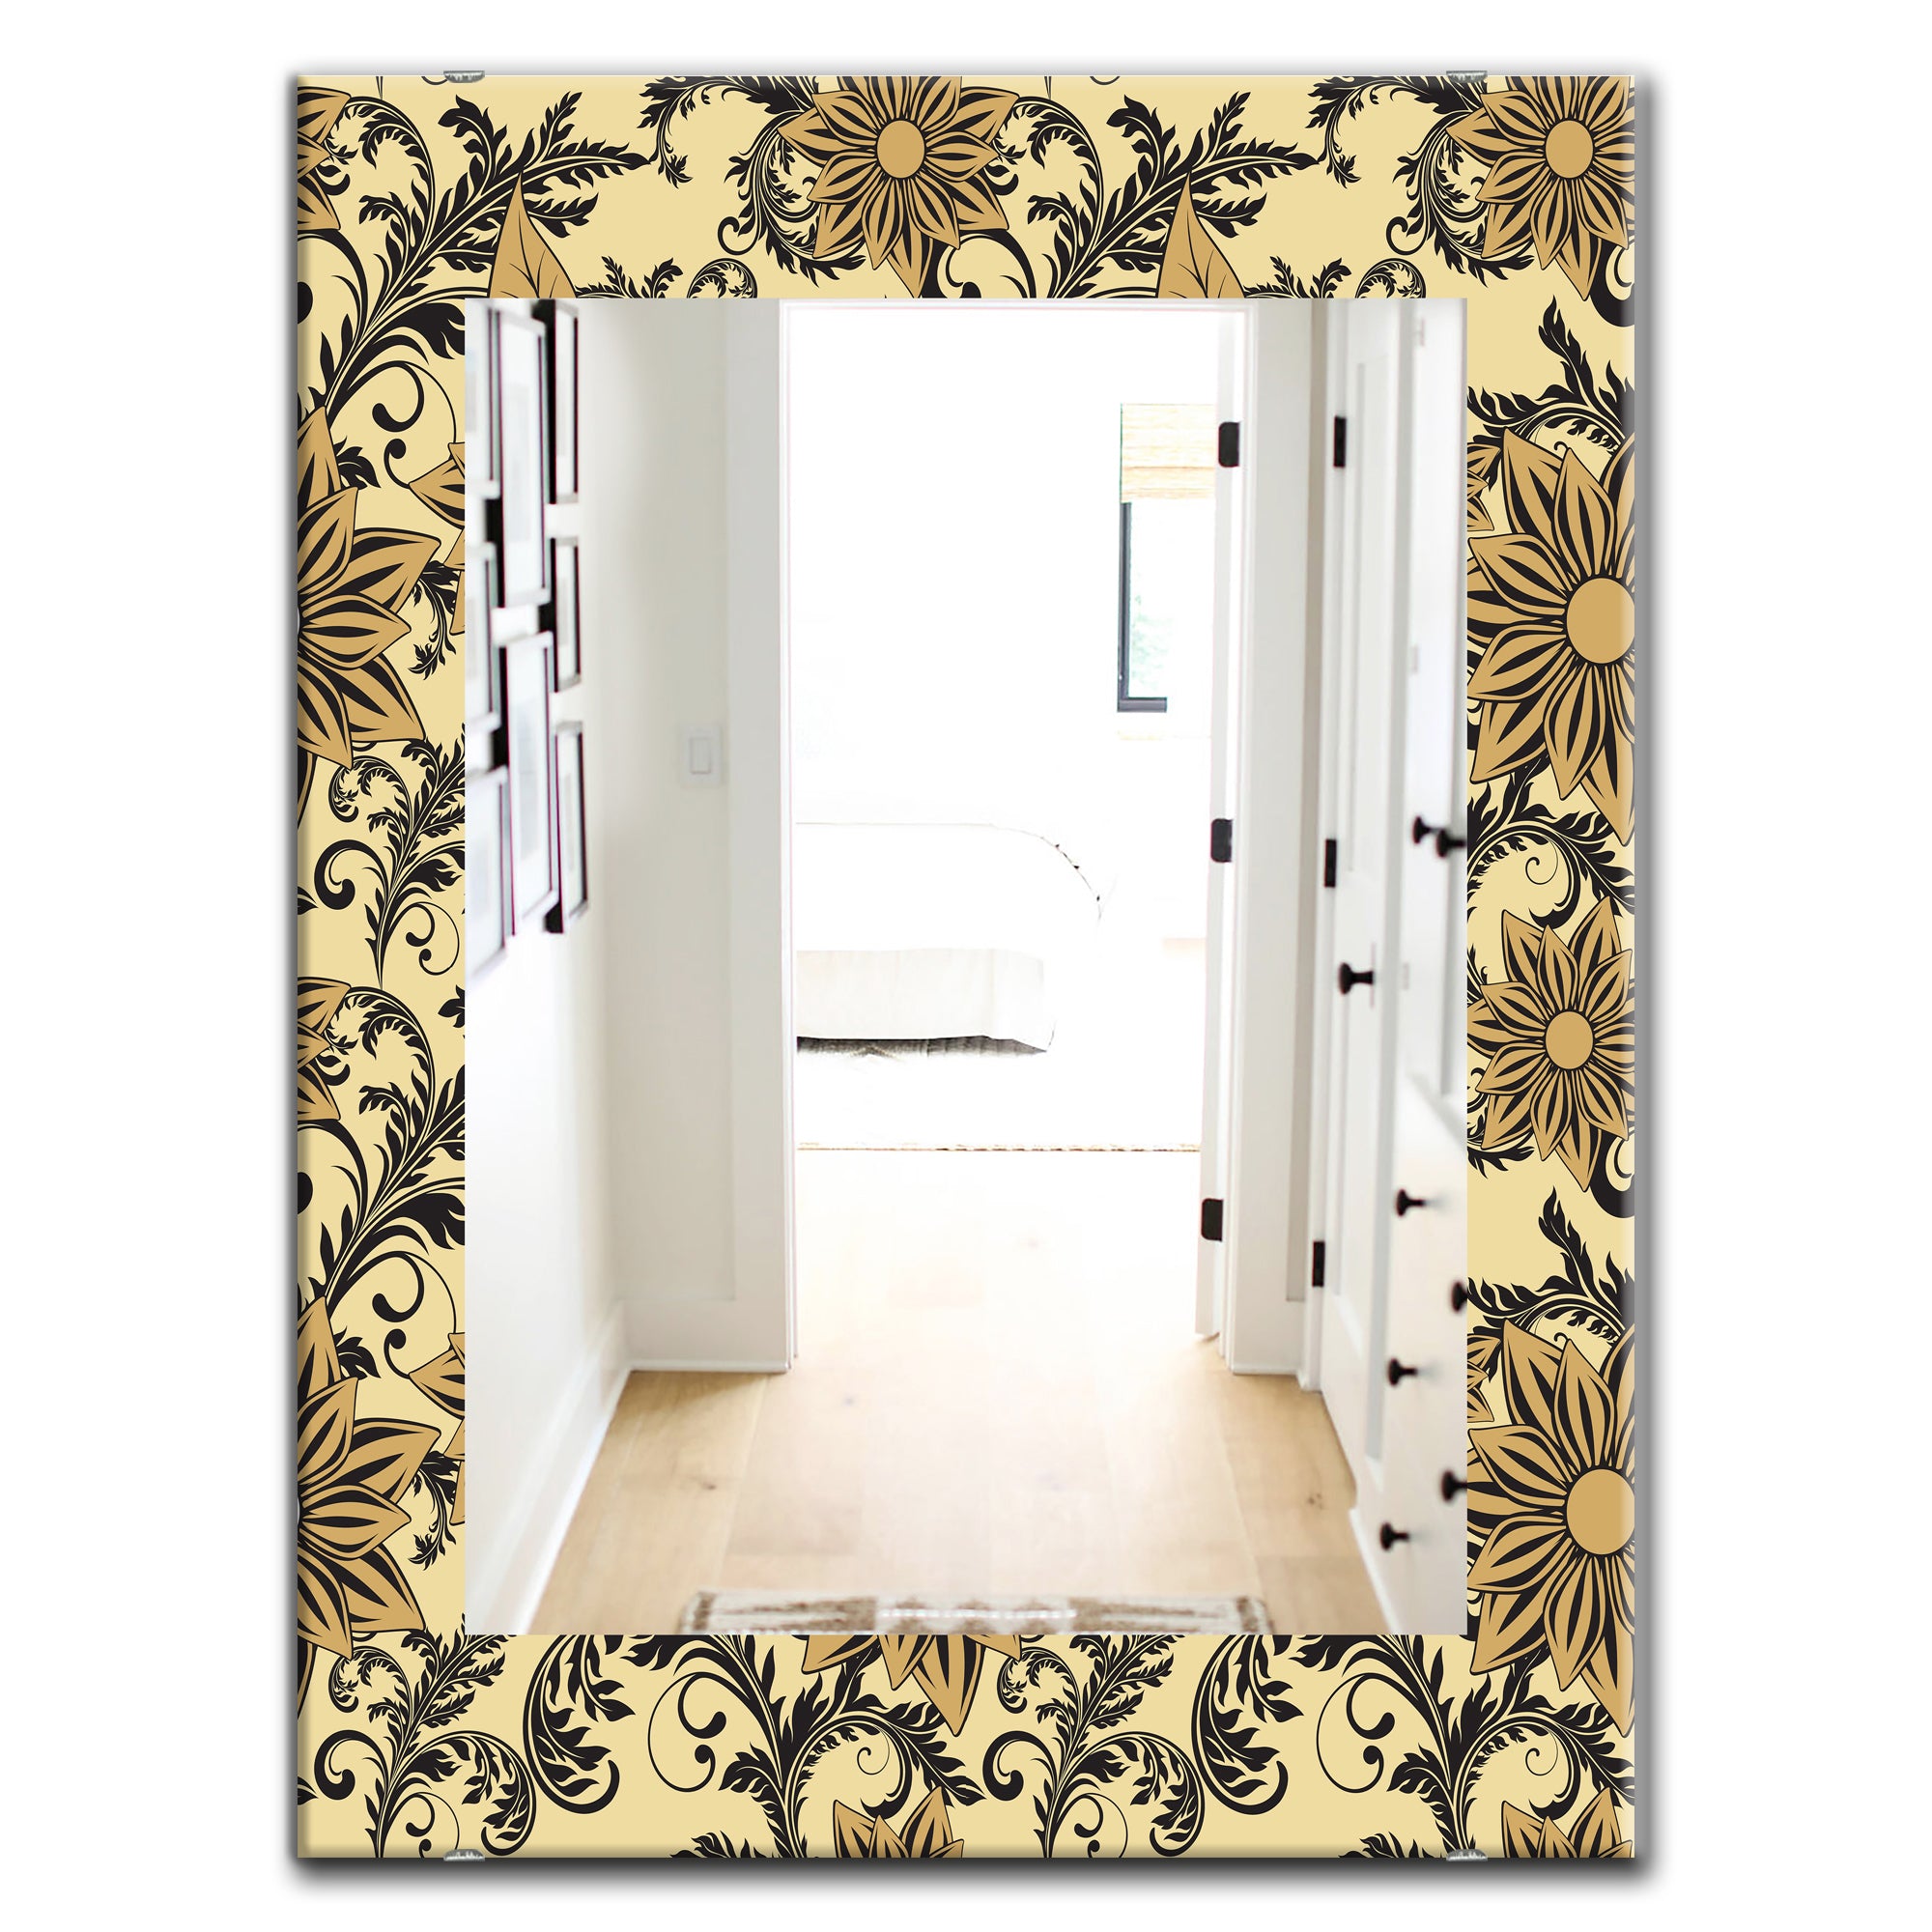 Designart 'Floral' Mid-Century Mirror - Oval or Round Wall Mirror